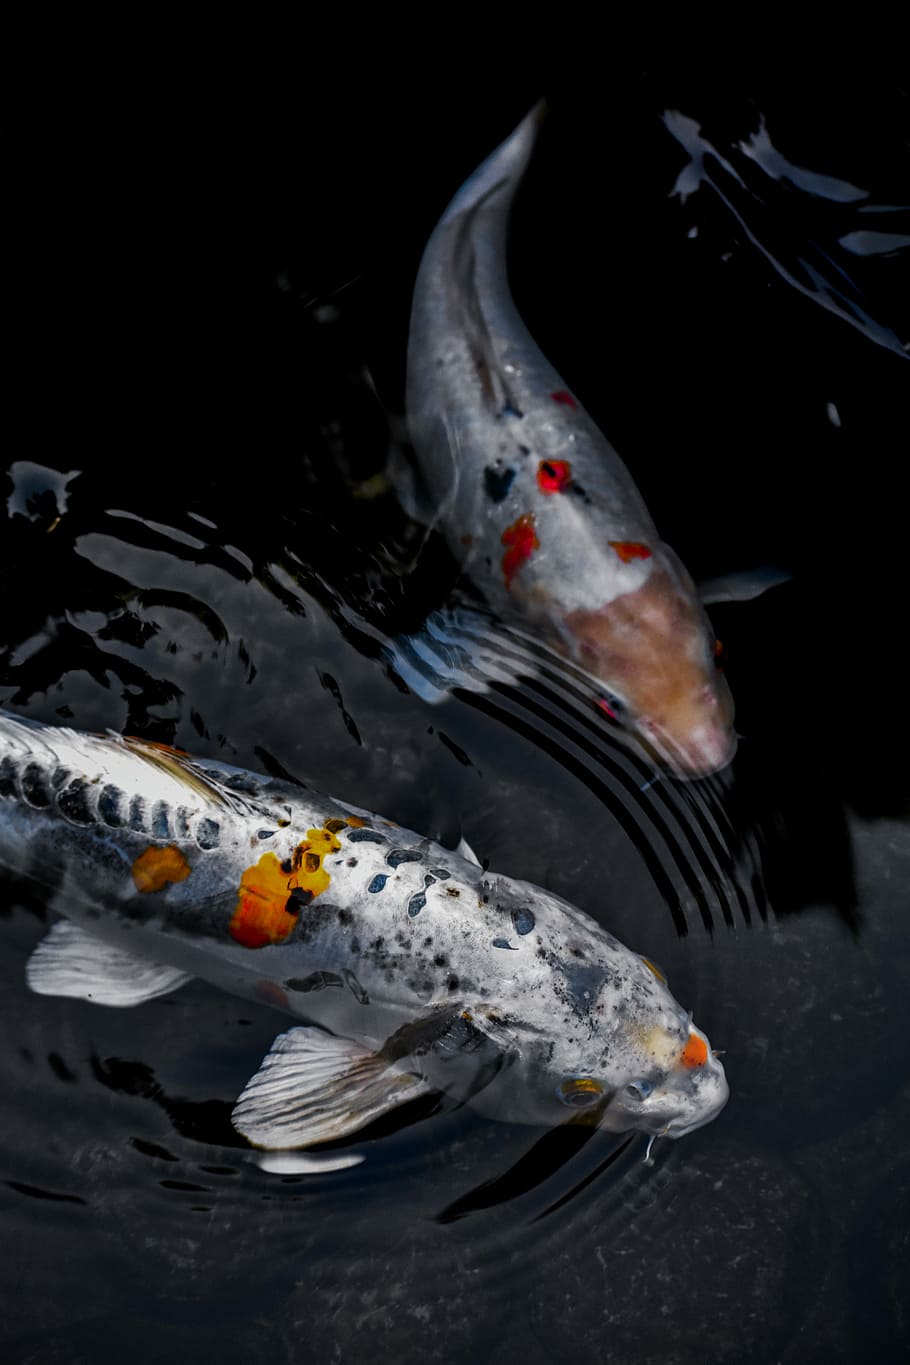 Two koi fish swimming in a pond - Koi fish